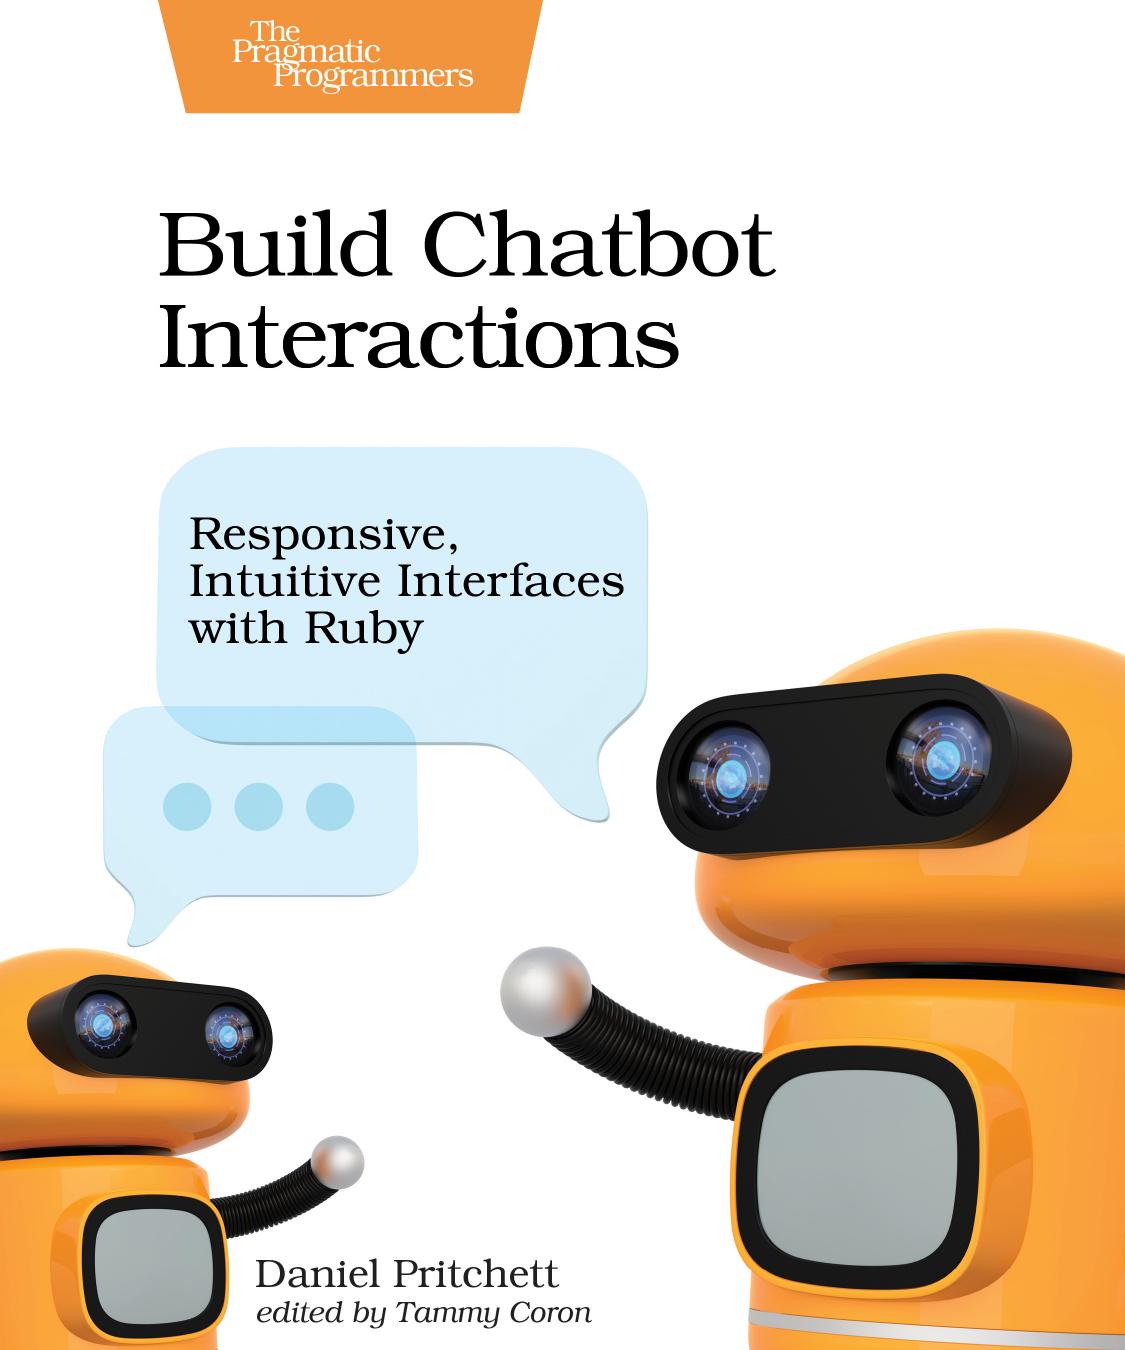 Build Chatbot Interactions by Daniel Pritchett